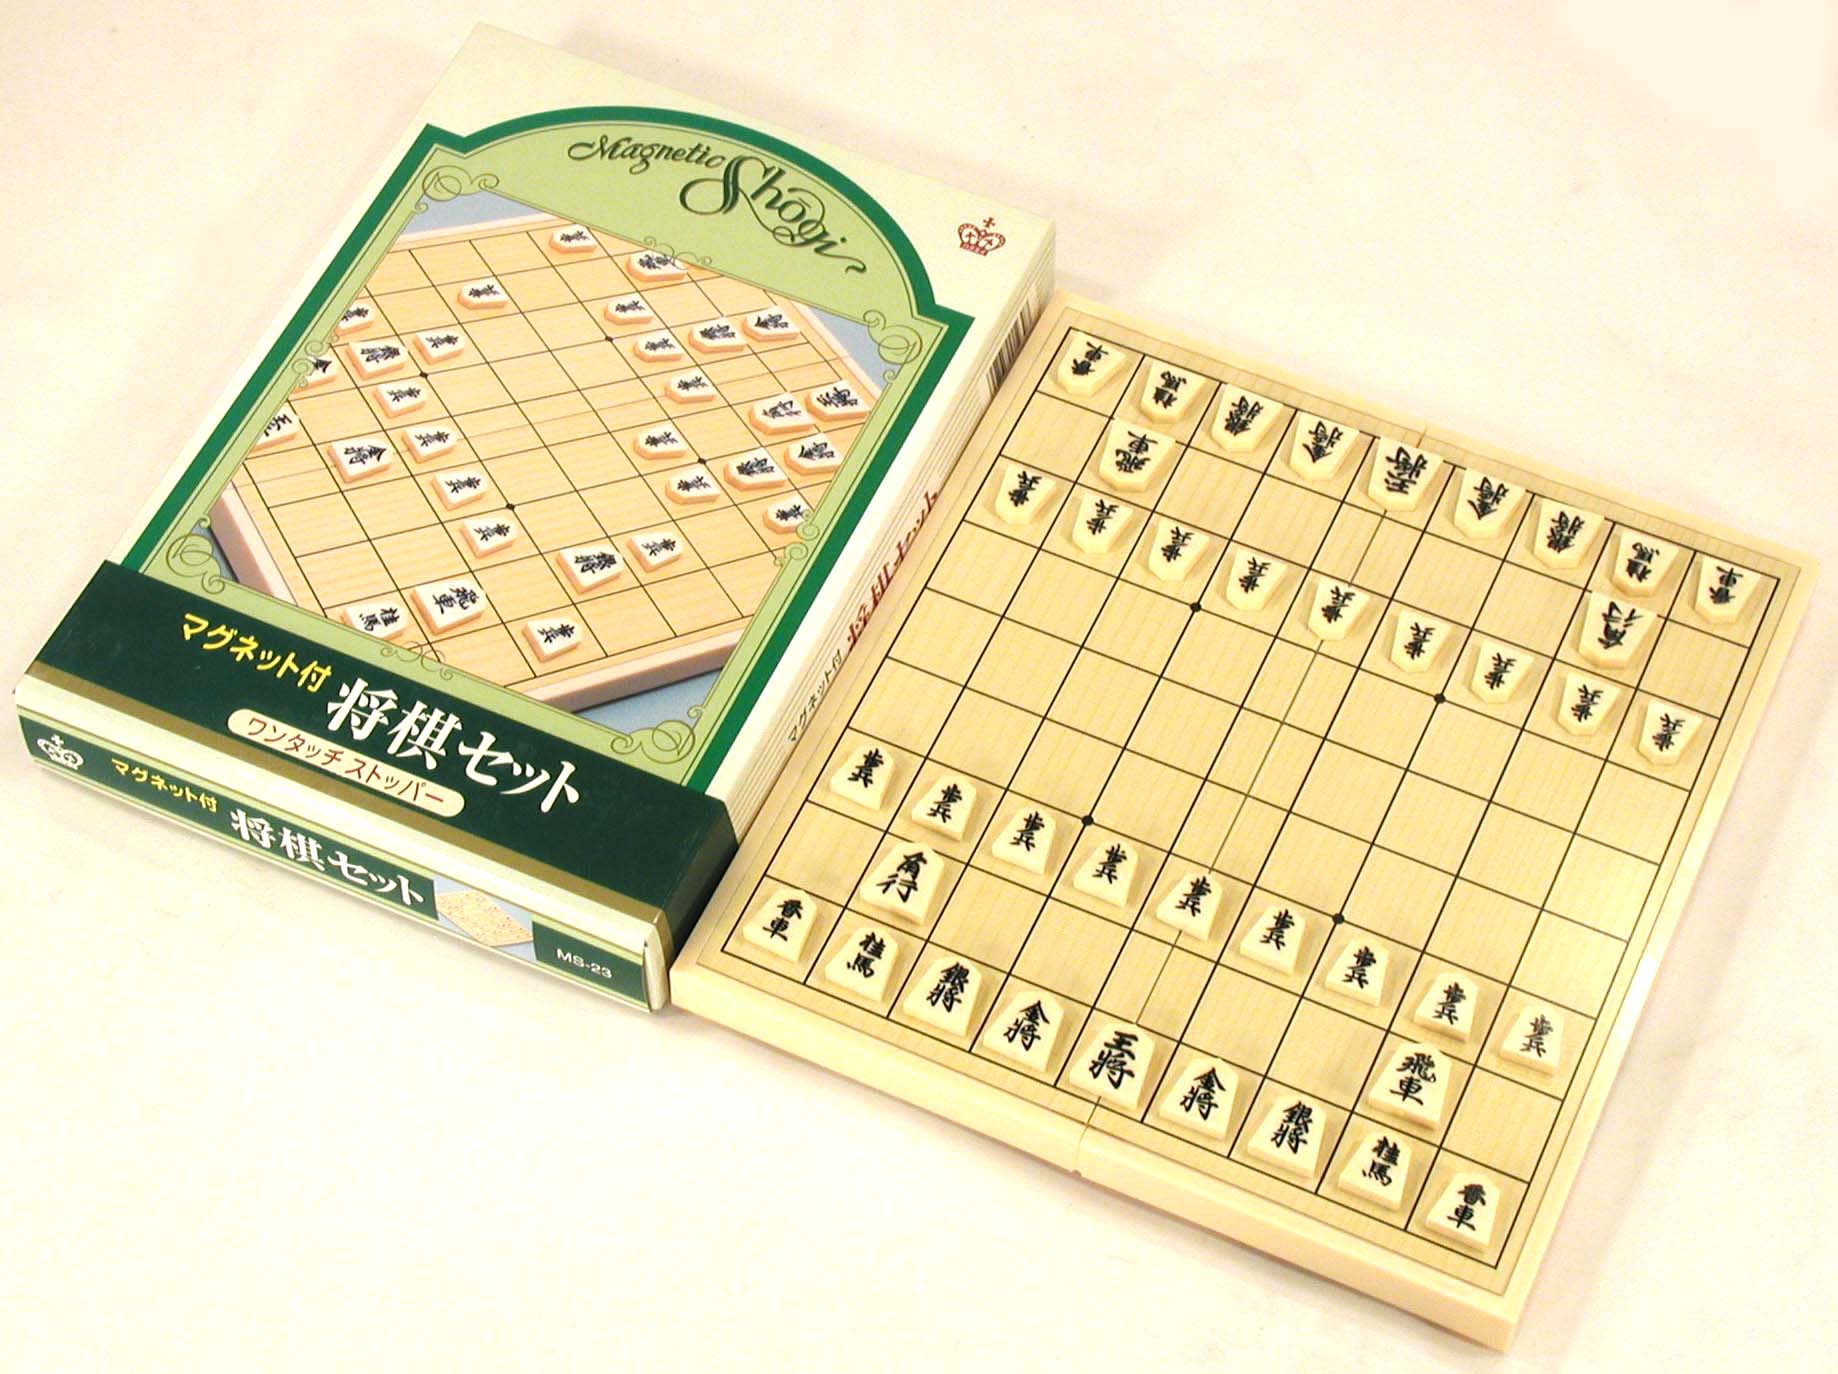 Japanese Chess Classical Honkaku Shogi Game Set by Hanayama for sale online 